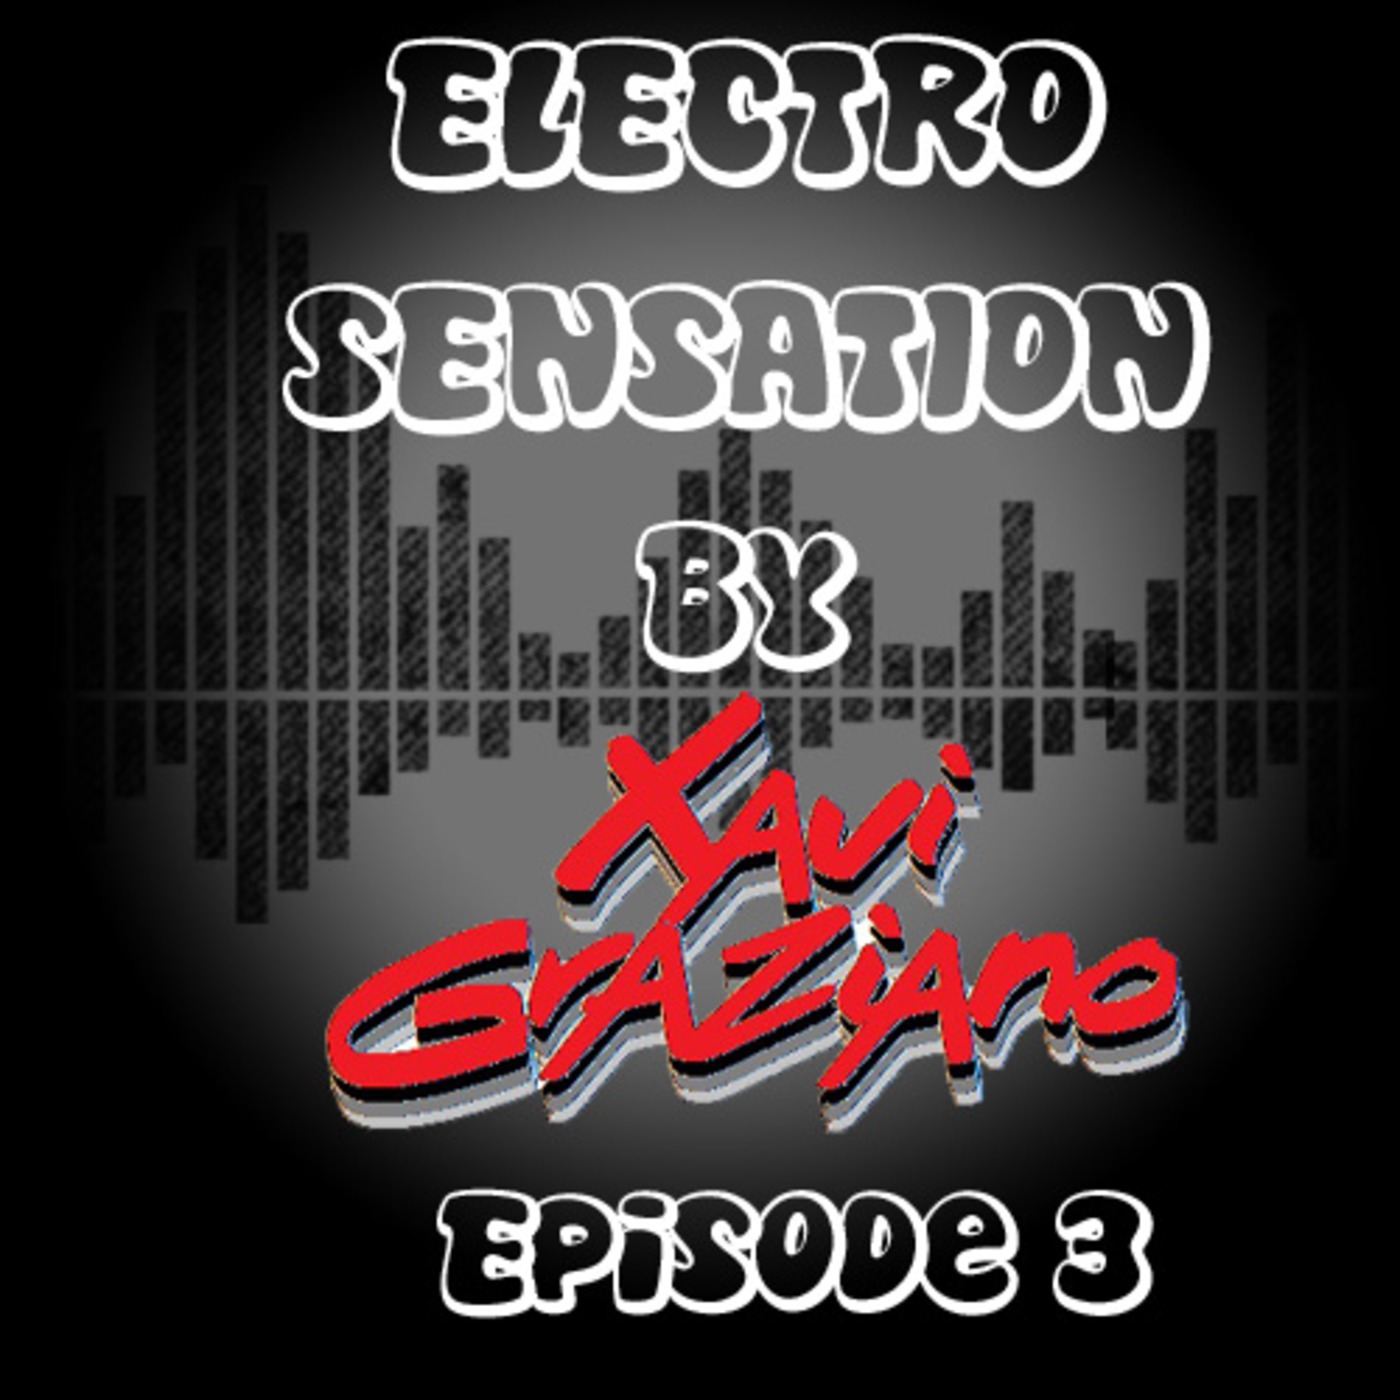 Electro Sensation by Xavi Graziano Episode 3